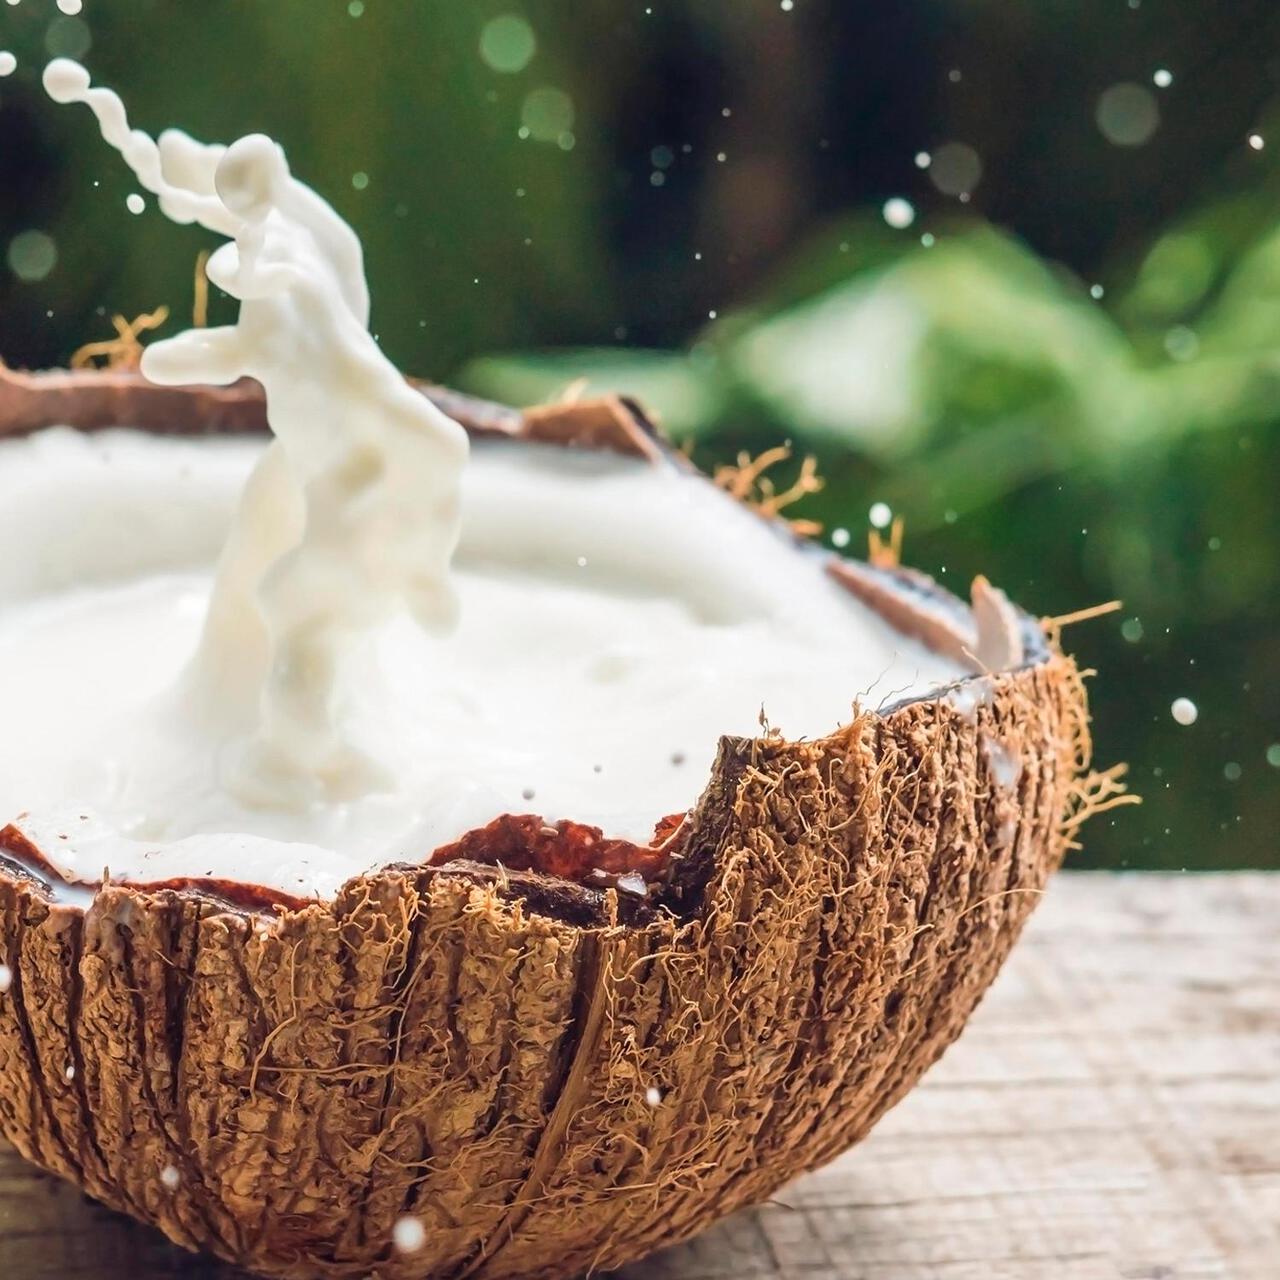 Maui Moisture Nourish & Moisture+ Coconut Milk Shampoo 385ml